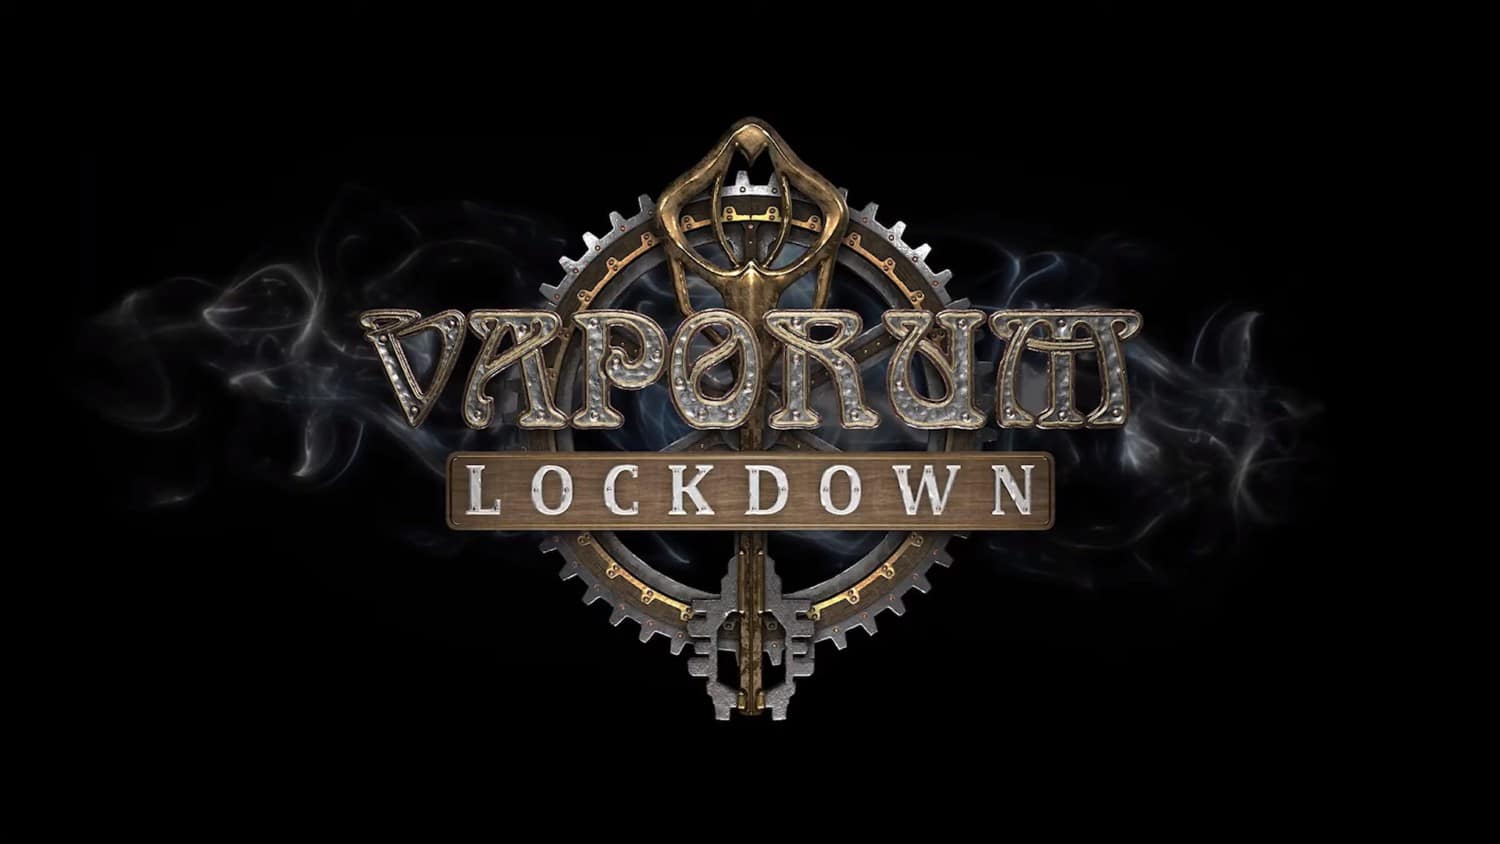 Vaporum: Lockdown player count stats